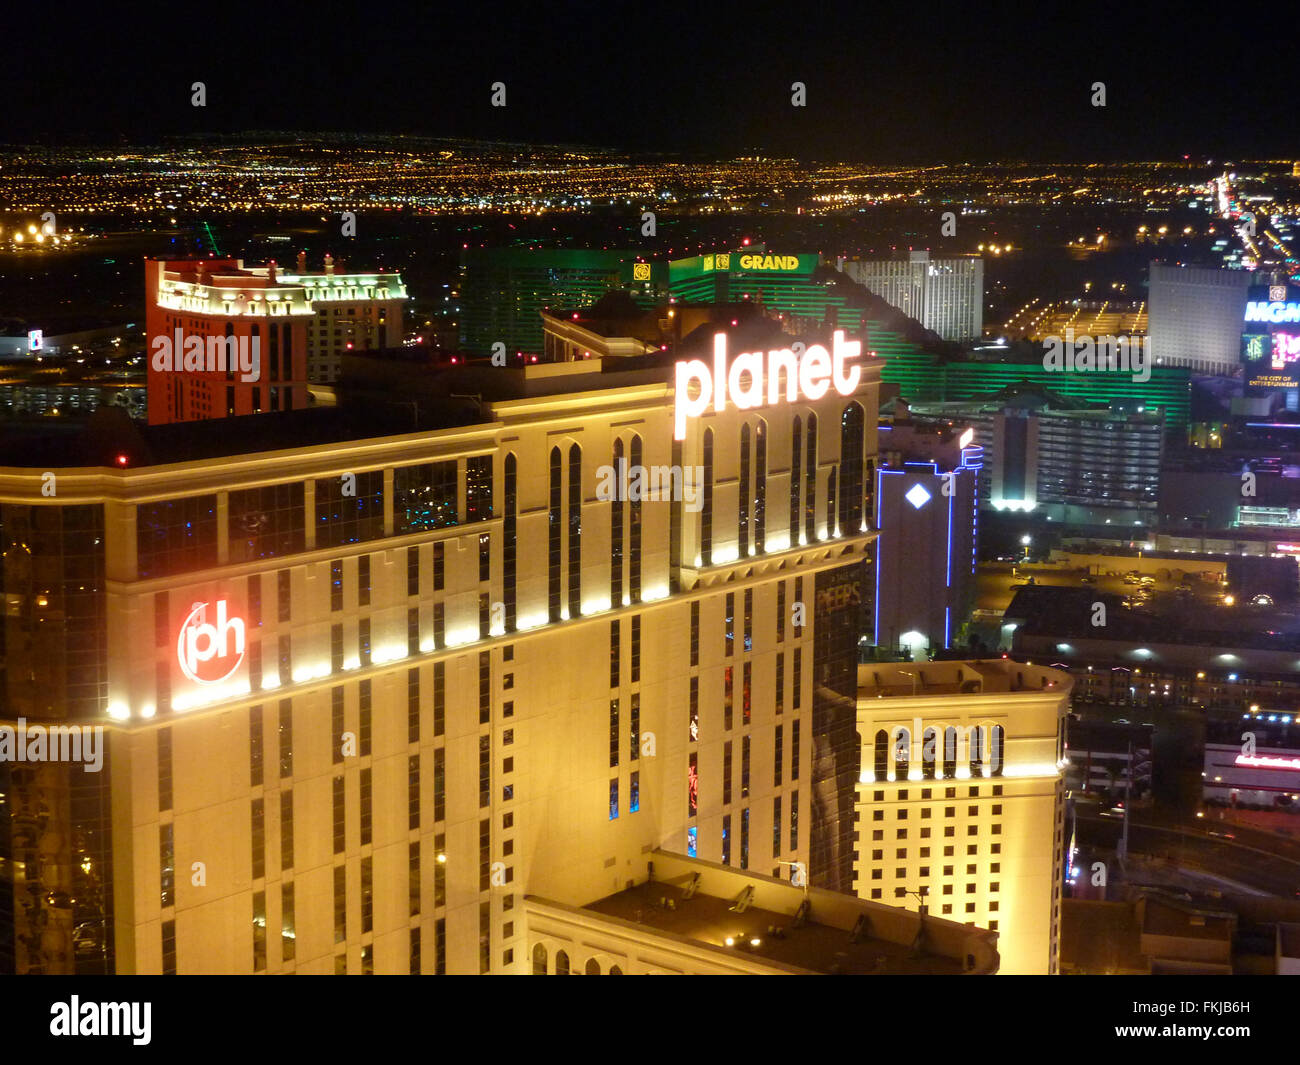 Aladdin casino -Fotos und -Bildmaterial in hoher Auflösung – Alamy